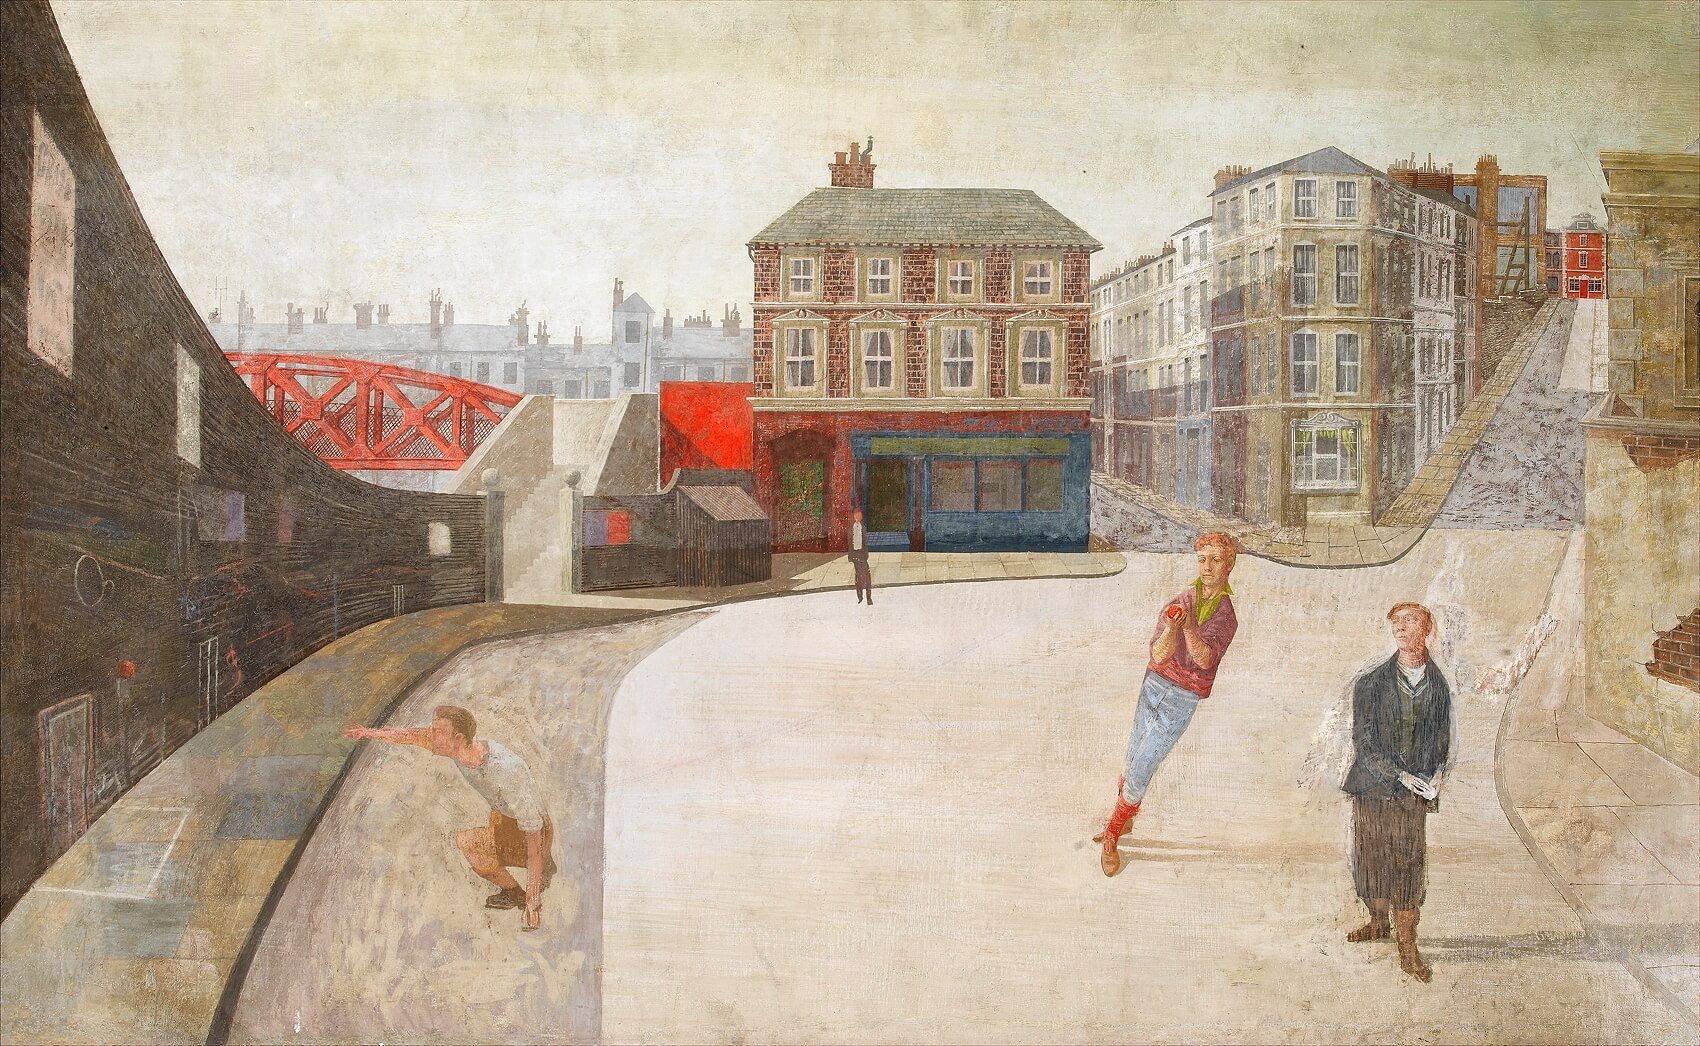 Reginald Brill - Boys playing cricket in an urban setting